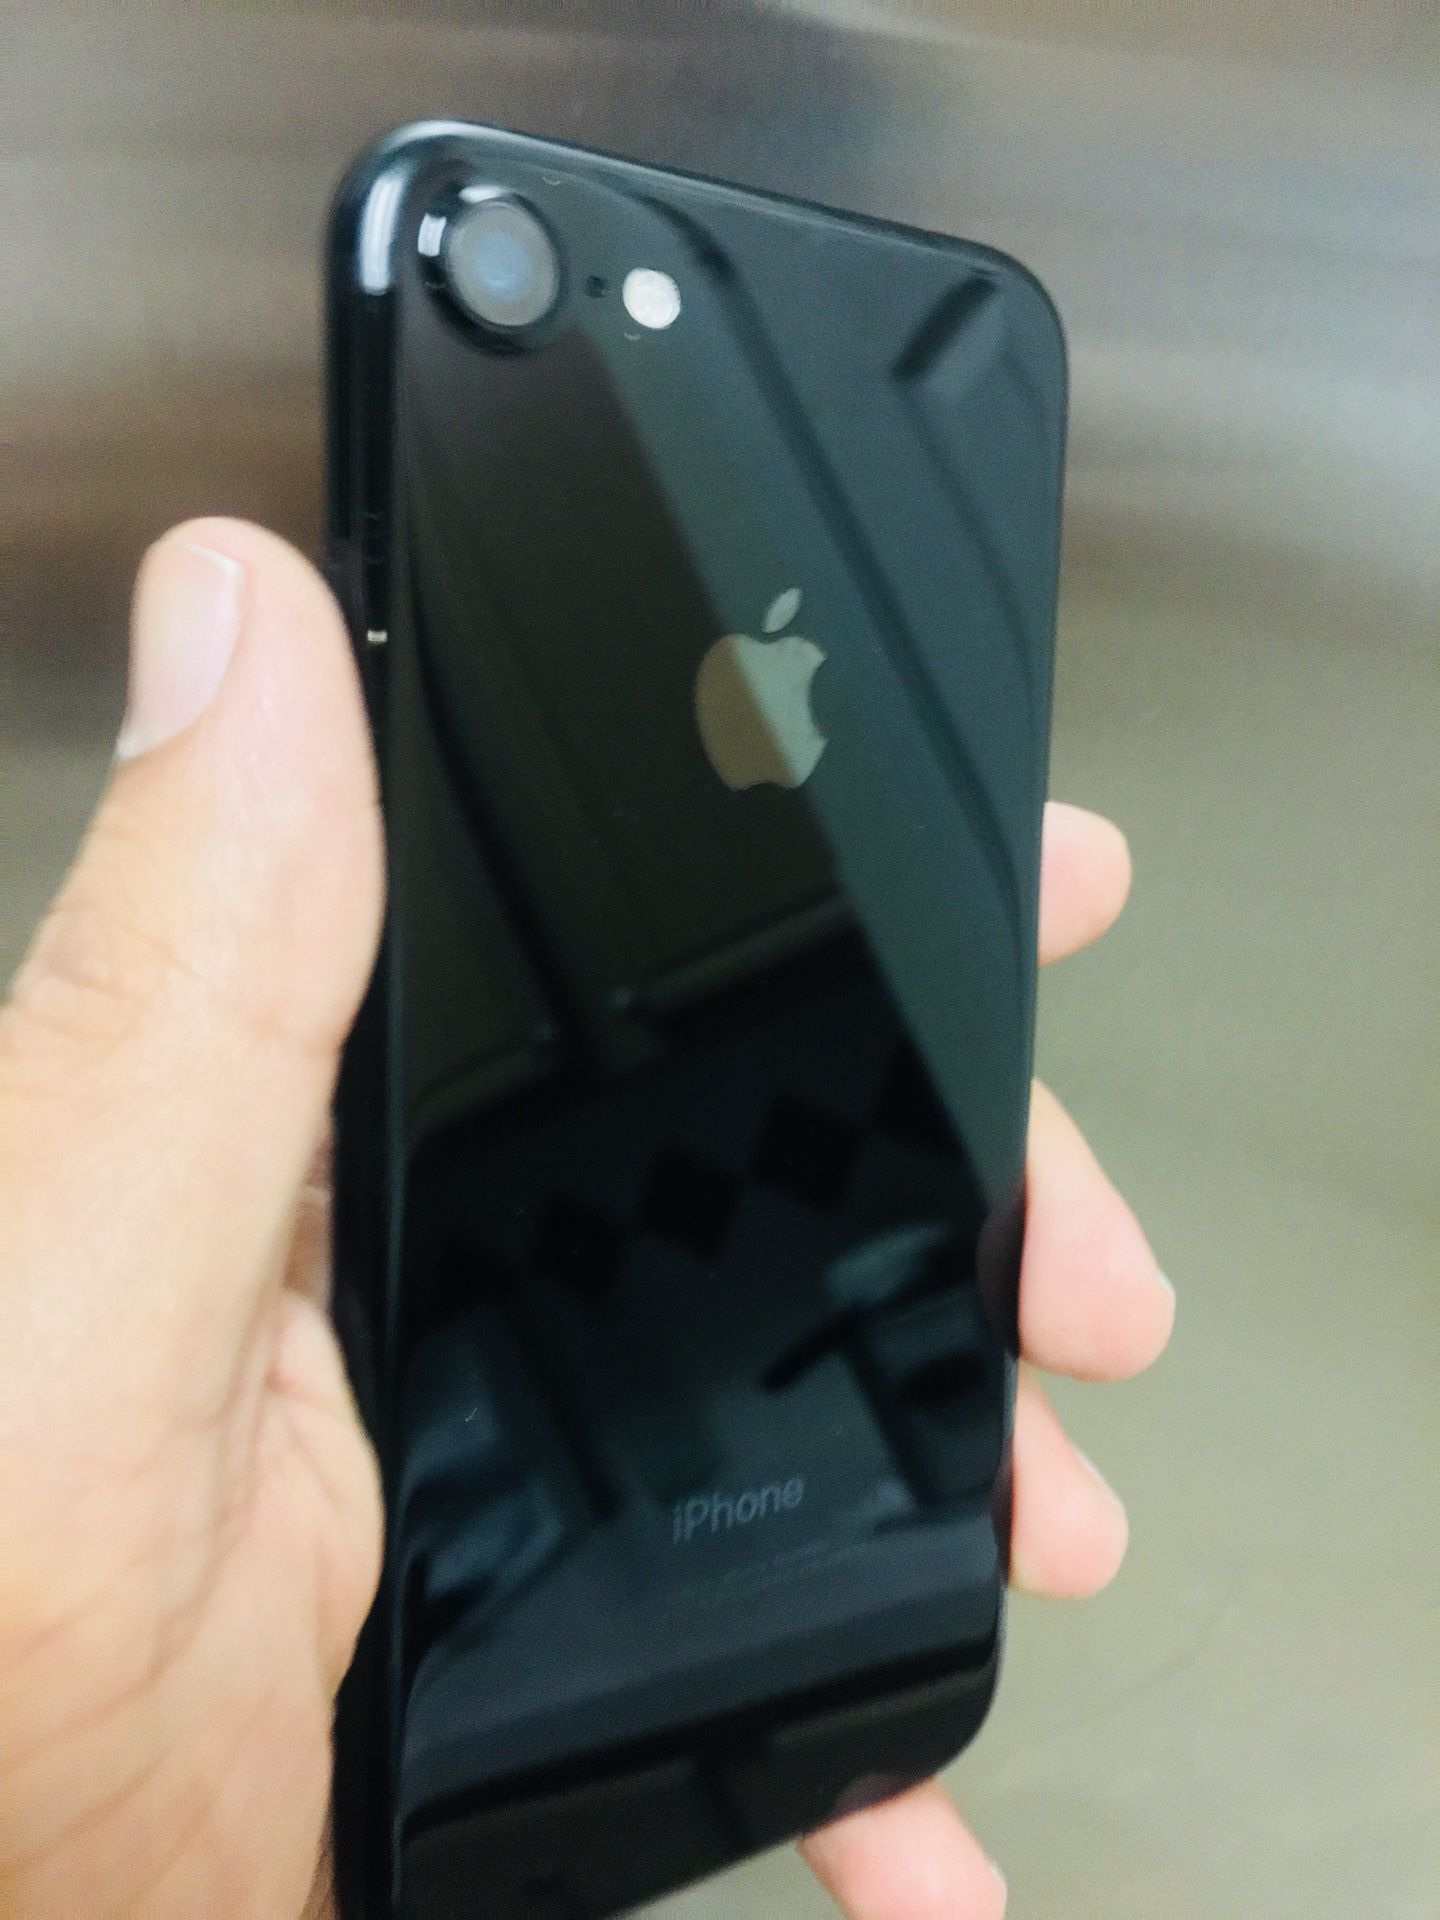 iPhone 7 factory unlocked